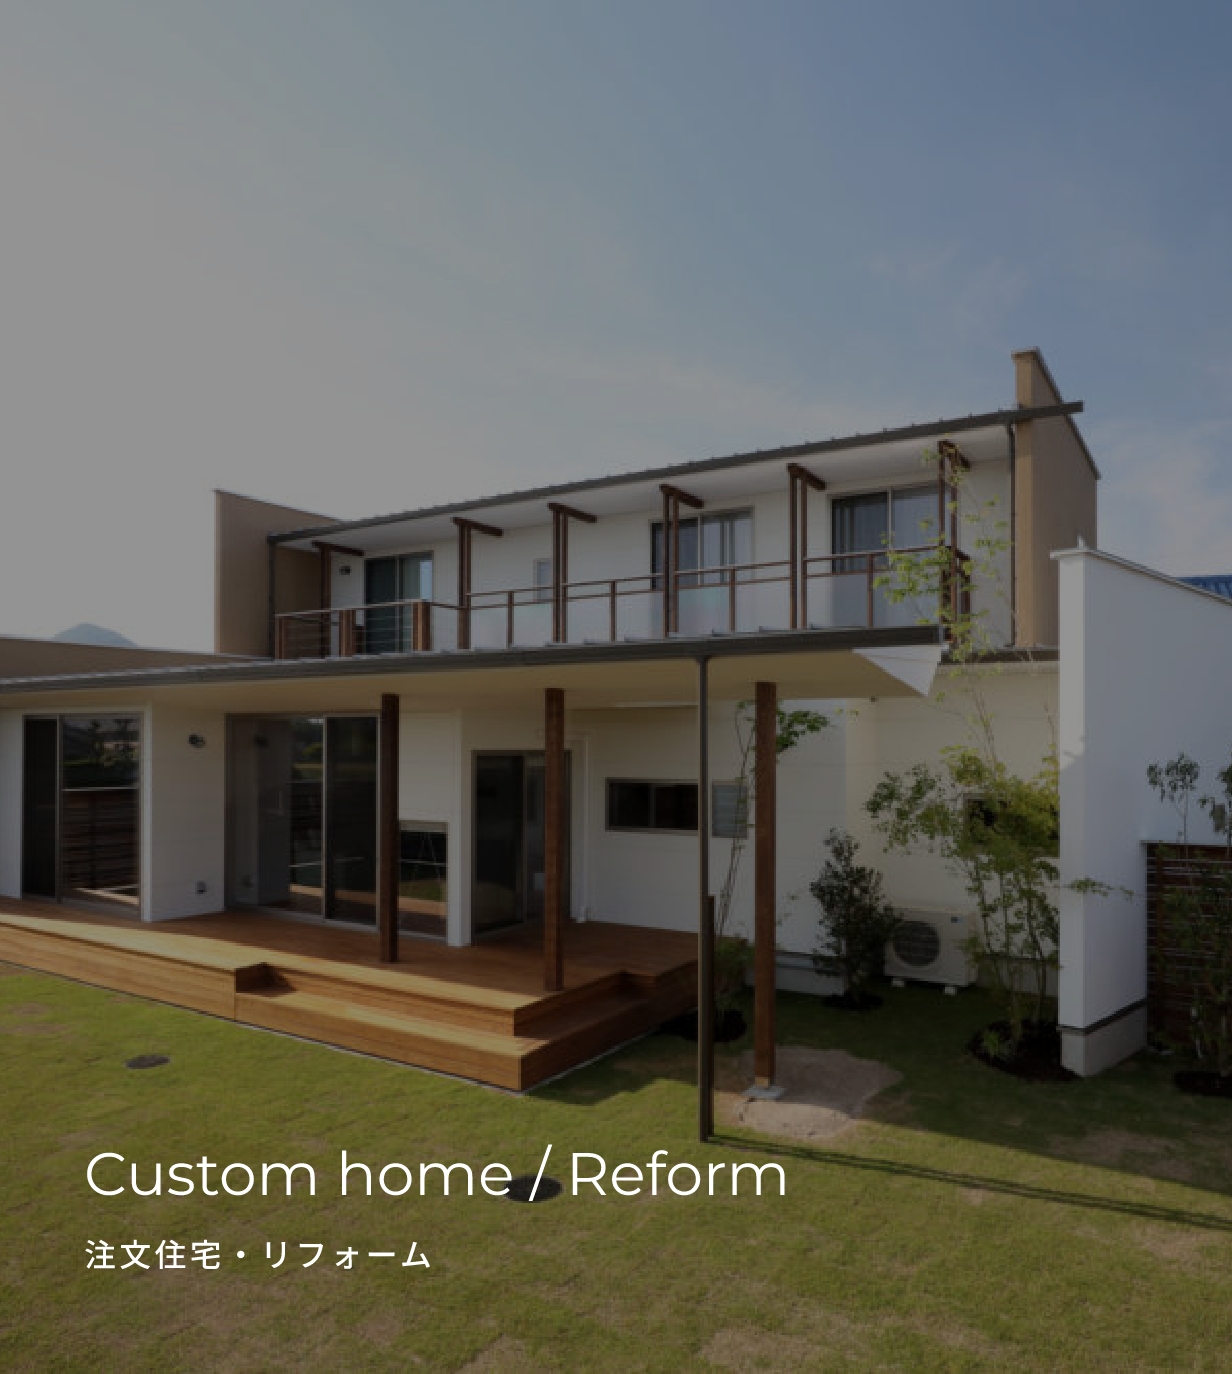 Custom home / Reform 注文住宅・リフォーム